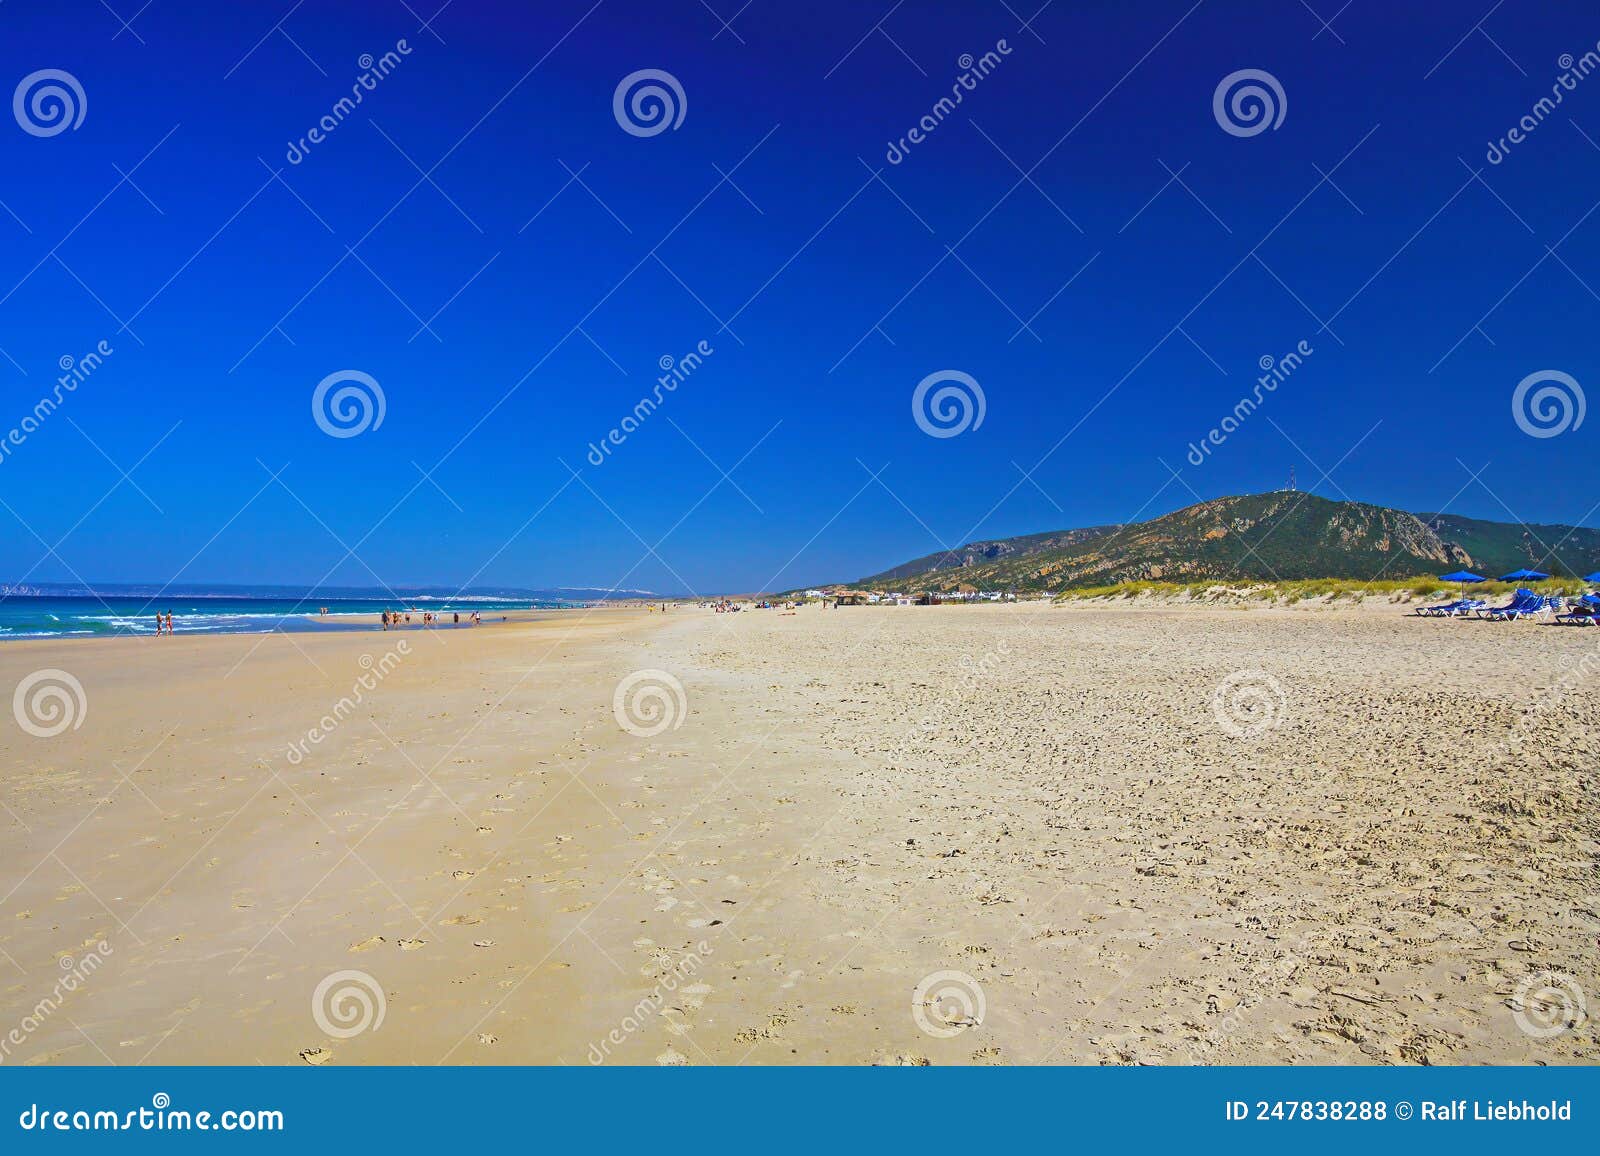 beautiful atlantic ocean empty natural sand beach, hills, clear cloudless blue sky - zahara de los atunes, costa de la luz, spain